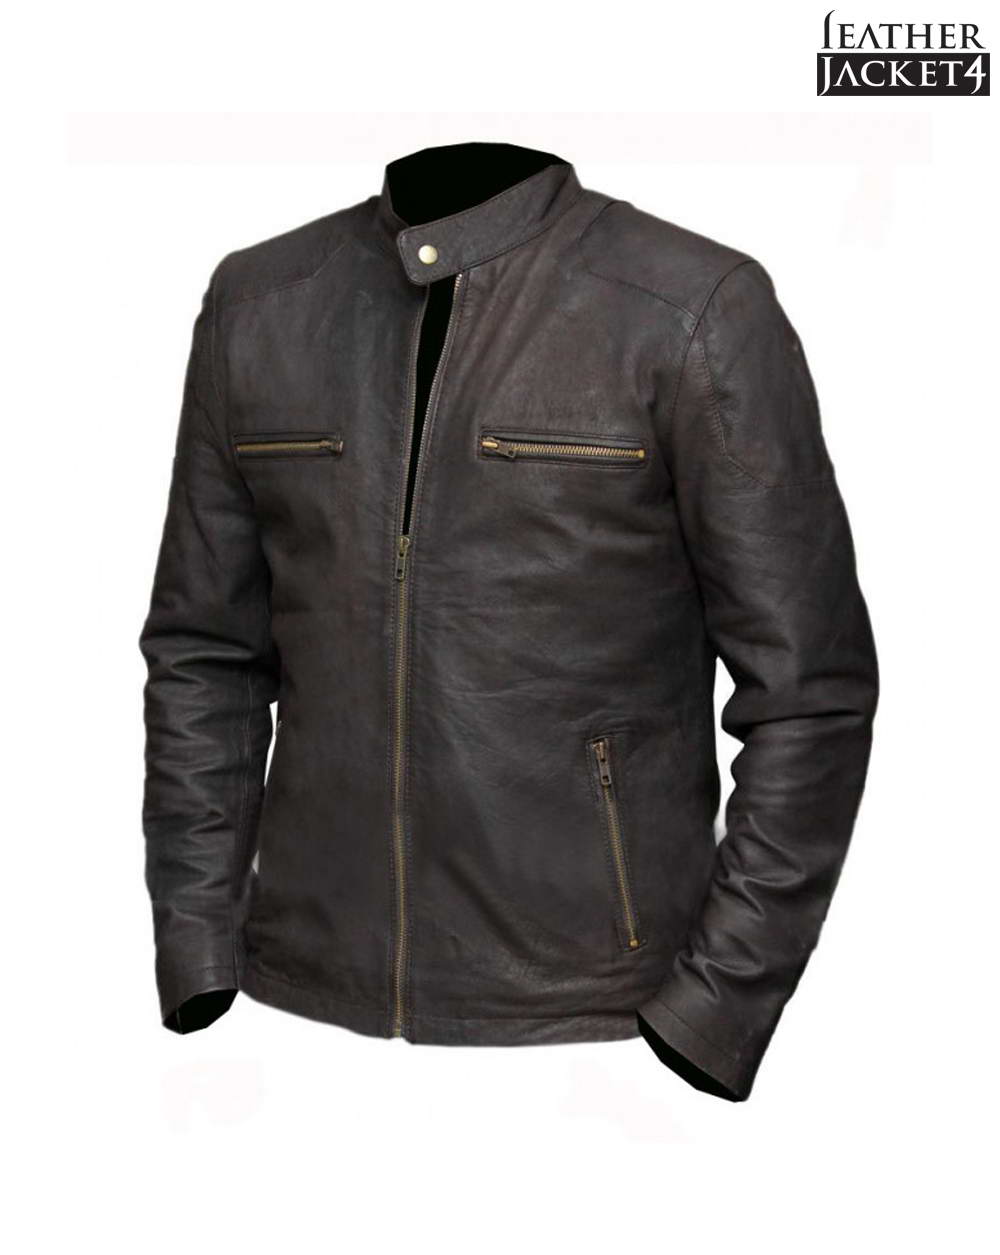 Civil War Steve Rogers Brown Leather Jacket